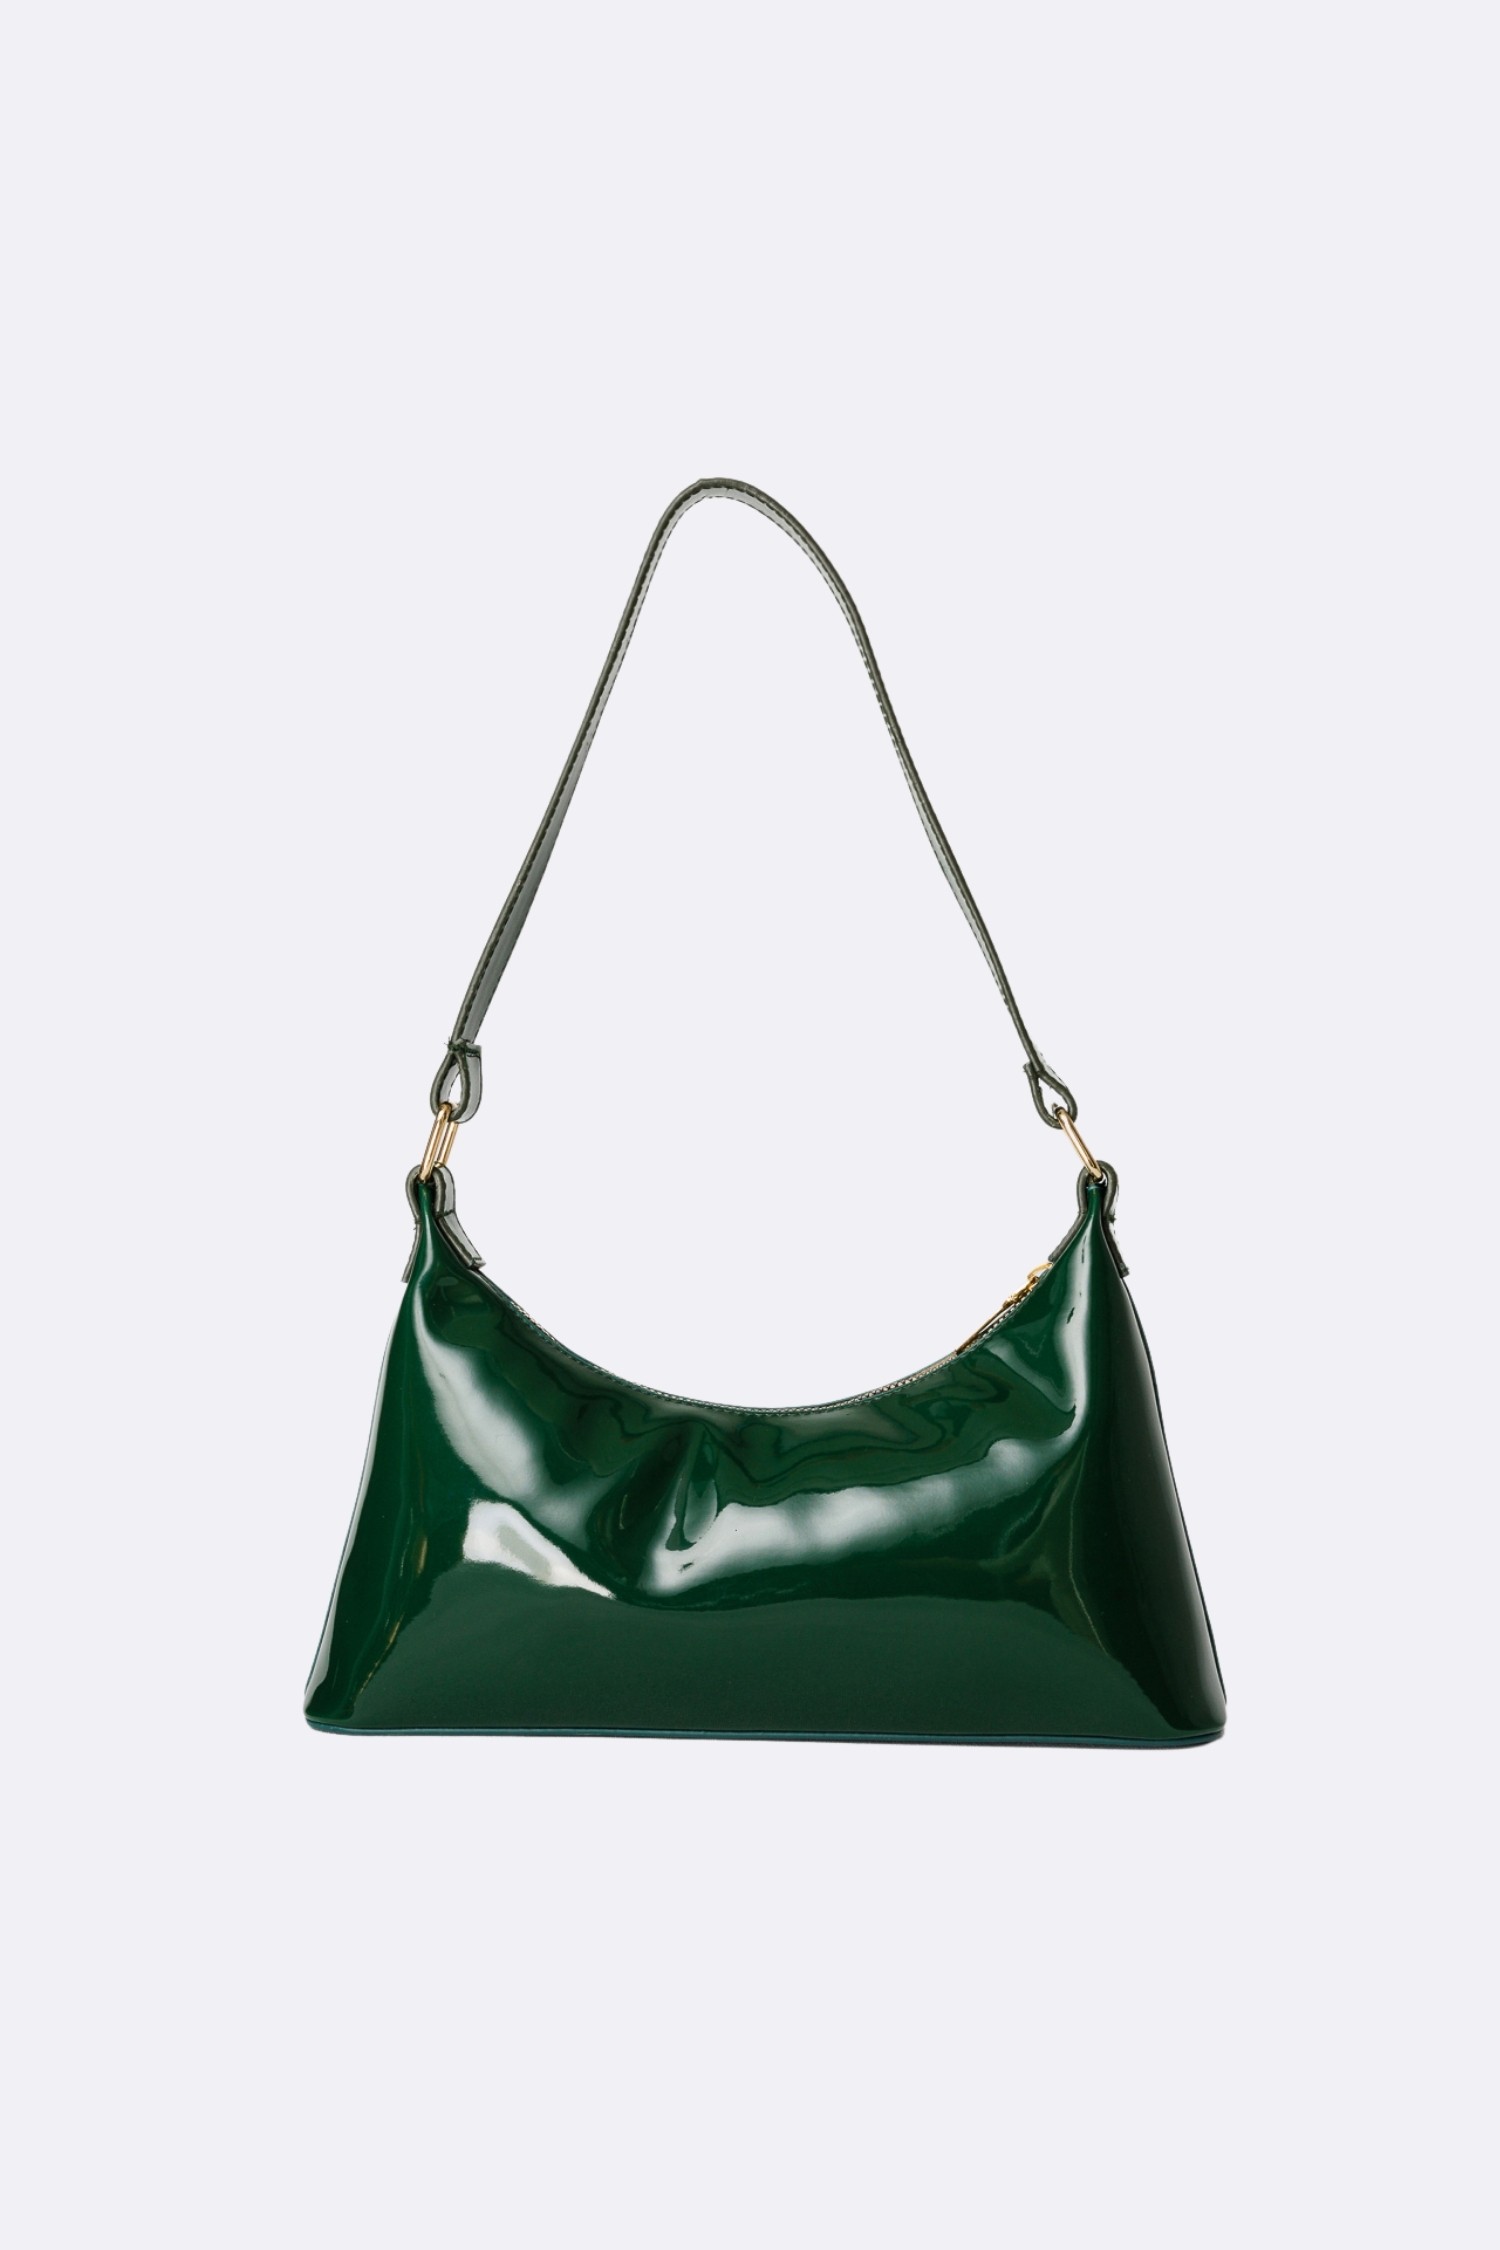 Garden Patent Leather Bag - Benetton Green